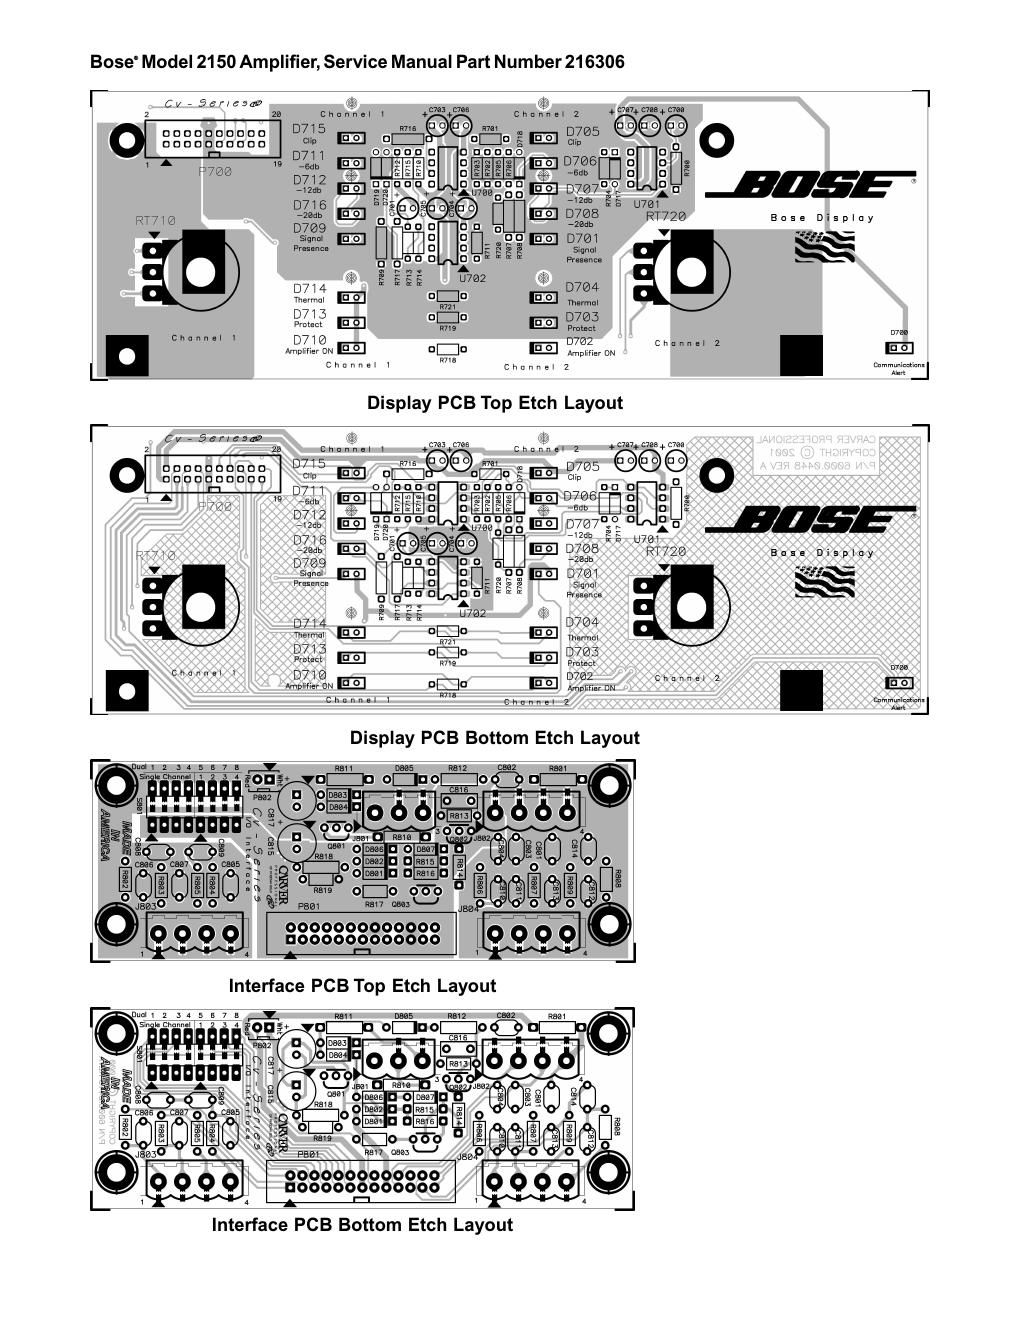 bose 2150 display and interface bose pcb layouts